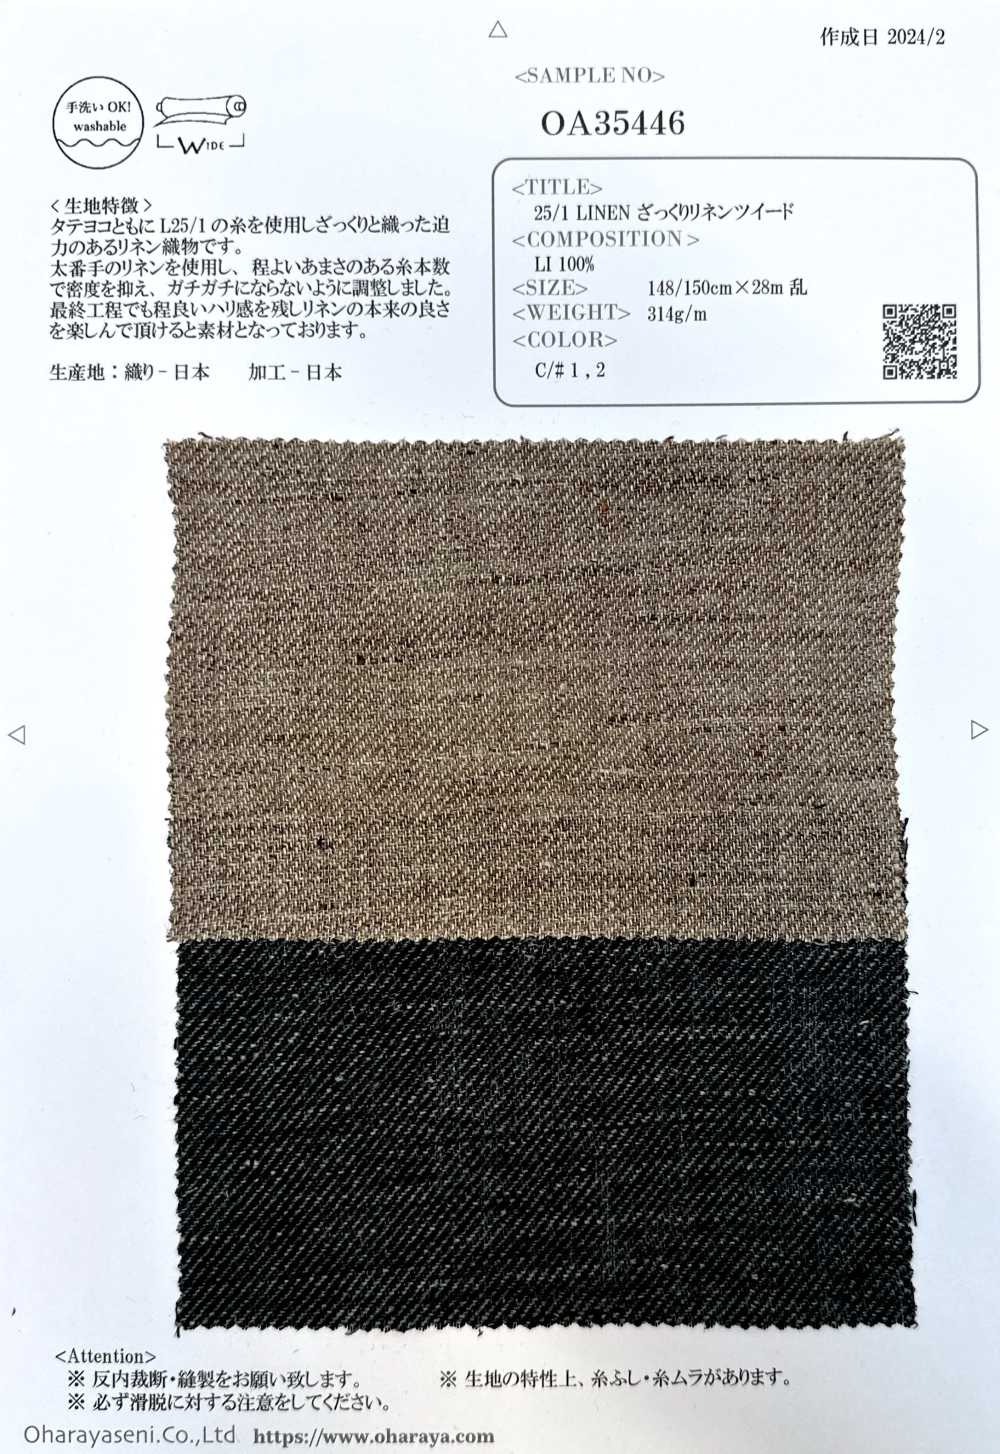 OA35446 25/1 LINO Tweed De Lino Aproximadamente[Fabrica Textil] Oharayaseni